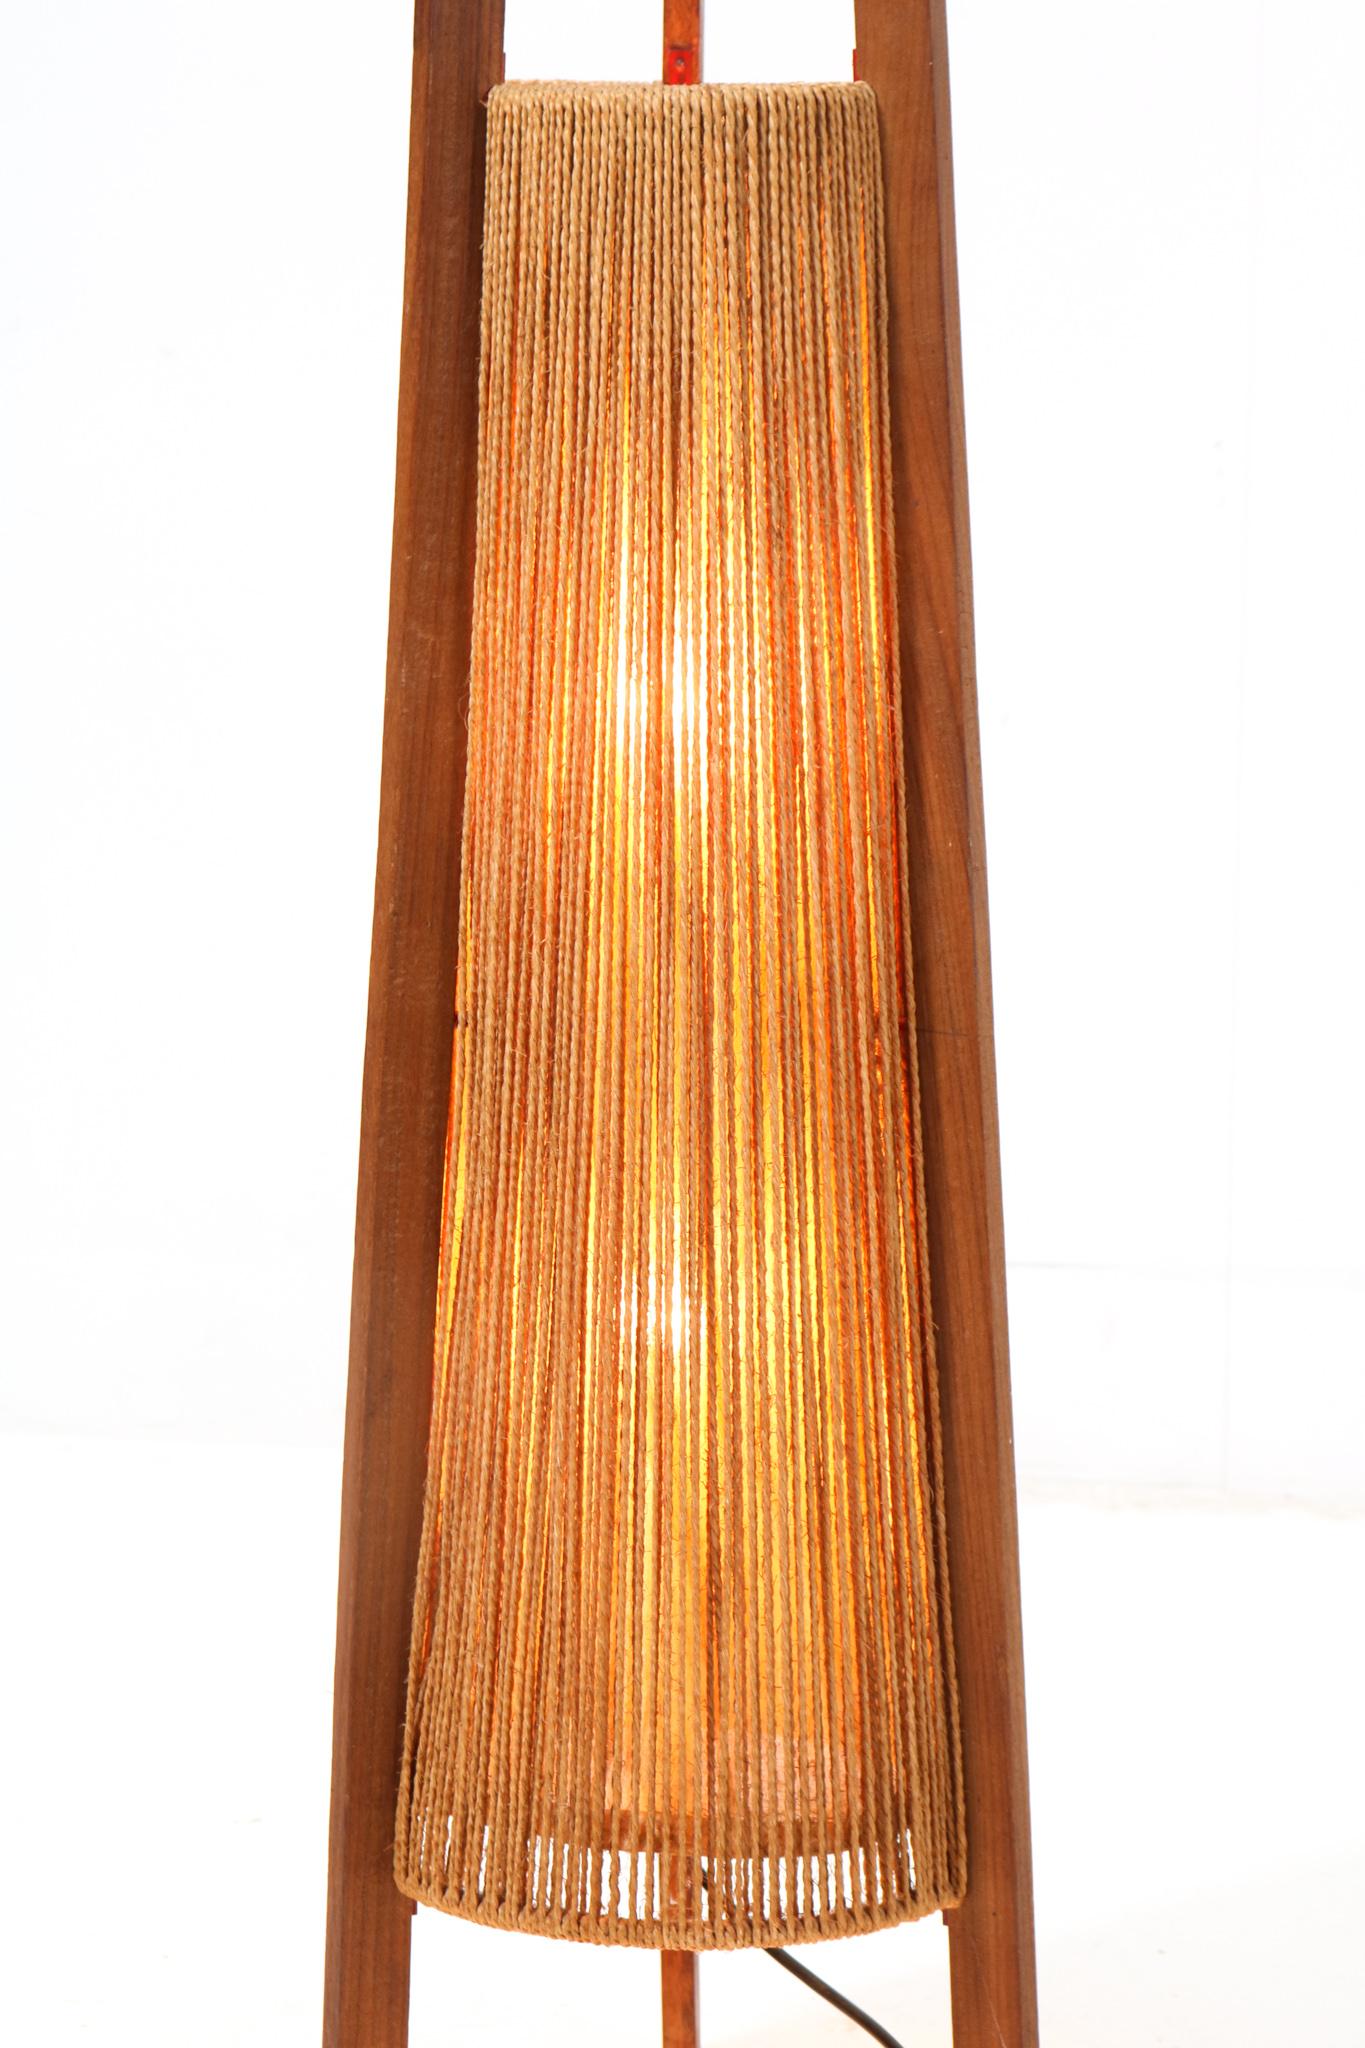 Mid-20th Century Teak Mid-Century Modern Tripod Floor Lamp with Hemp Strings, 1960s